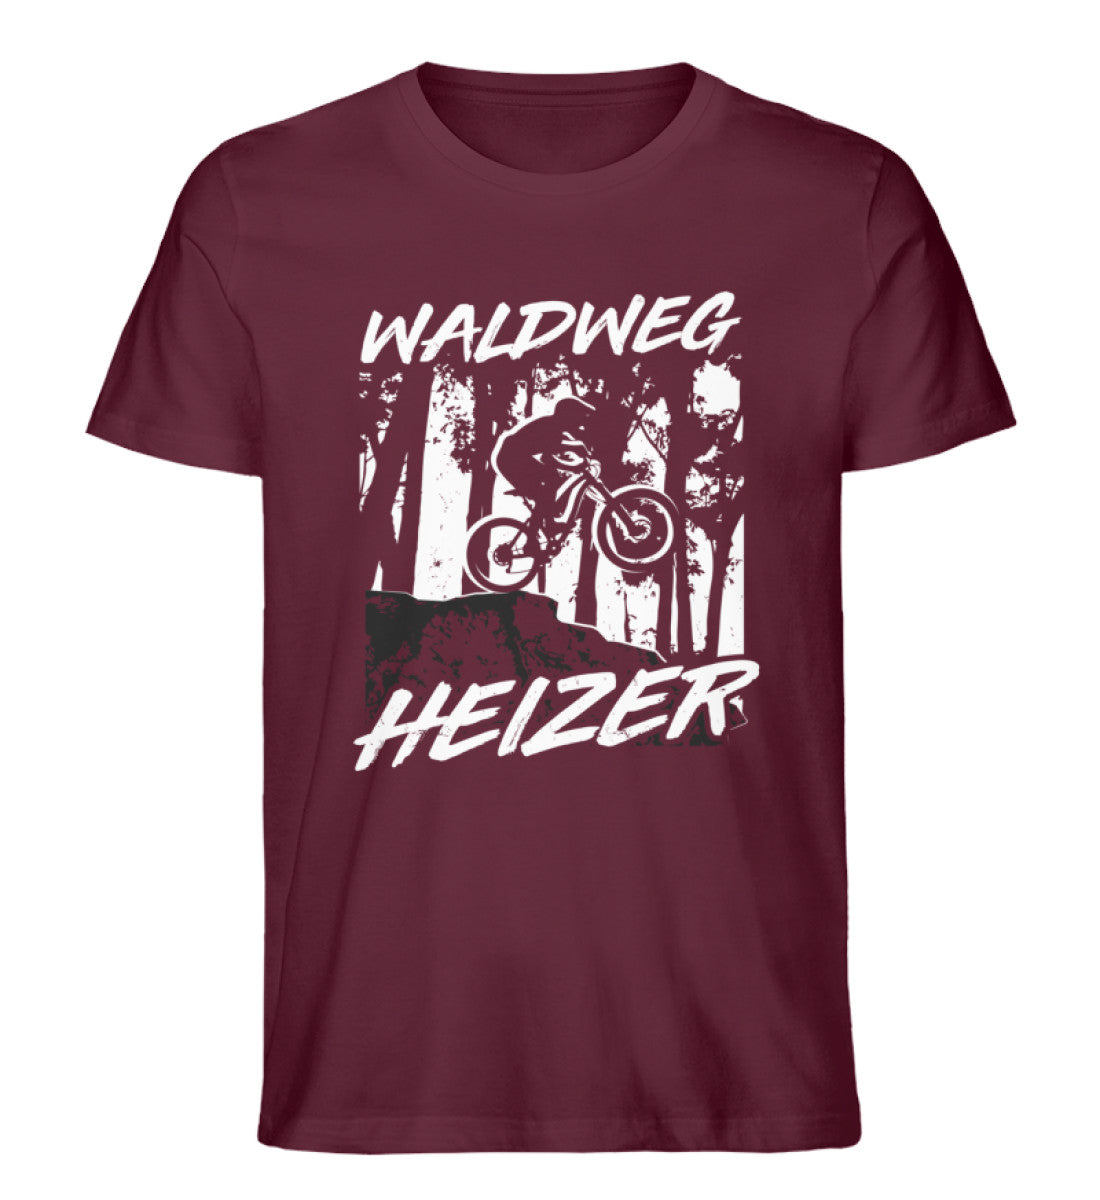 Waldweg Heizer - (F.W) - Herren Premium Organic T-Shirt fahrrad wandern Weinrot